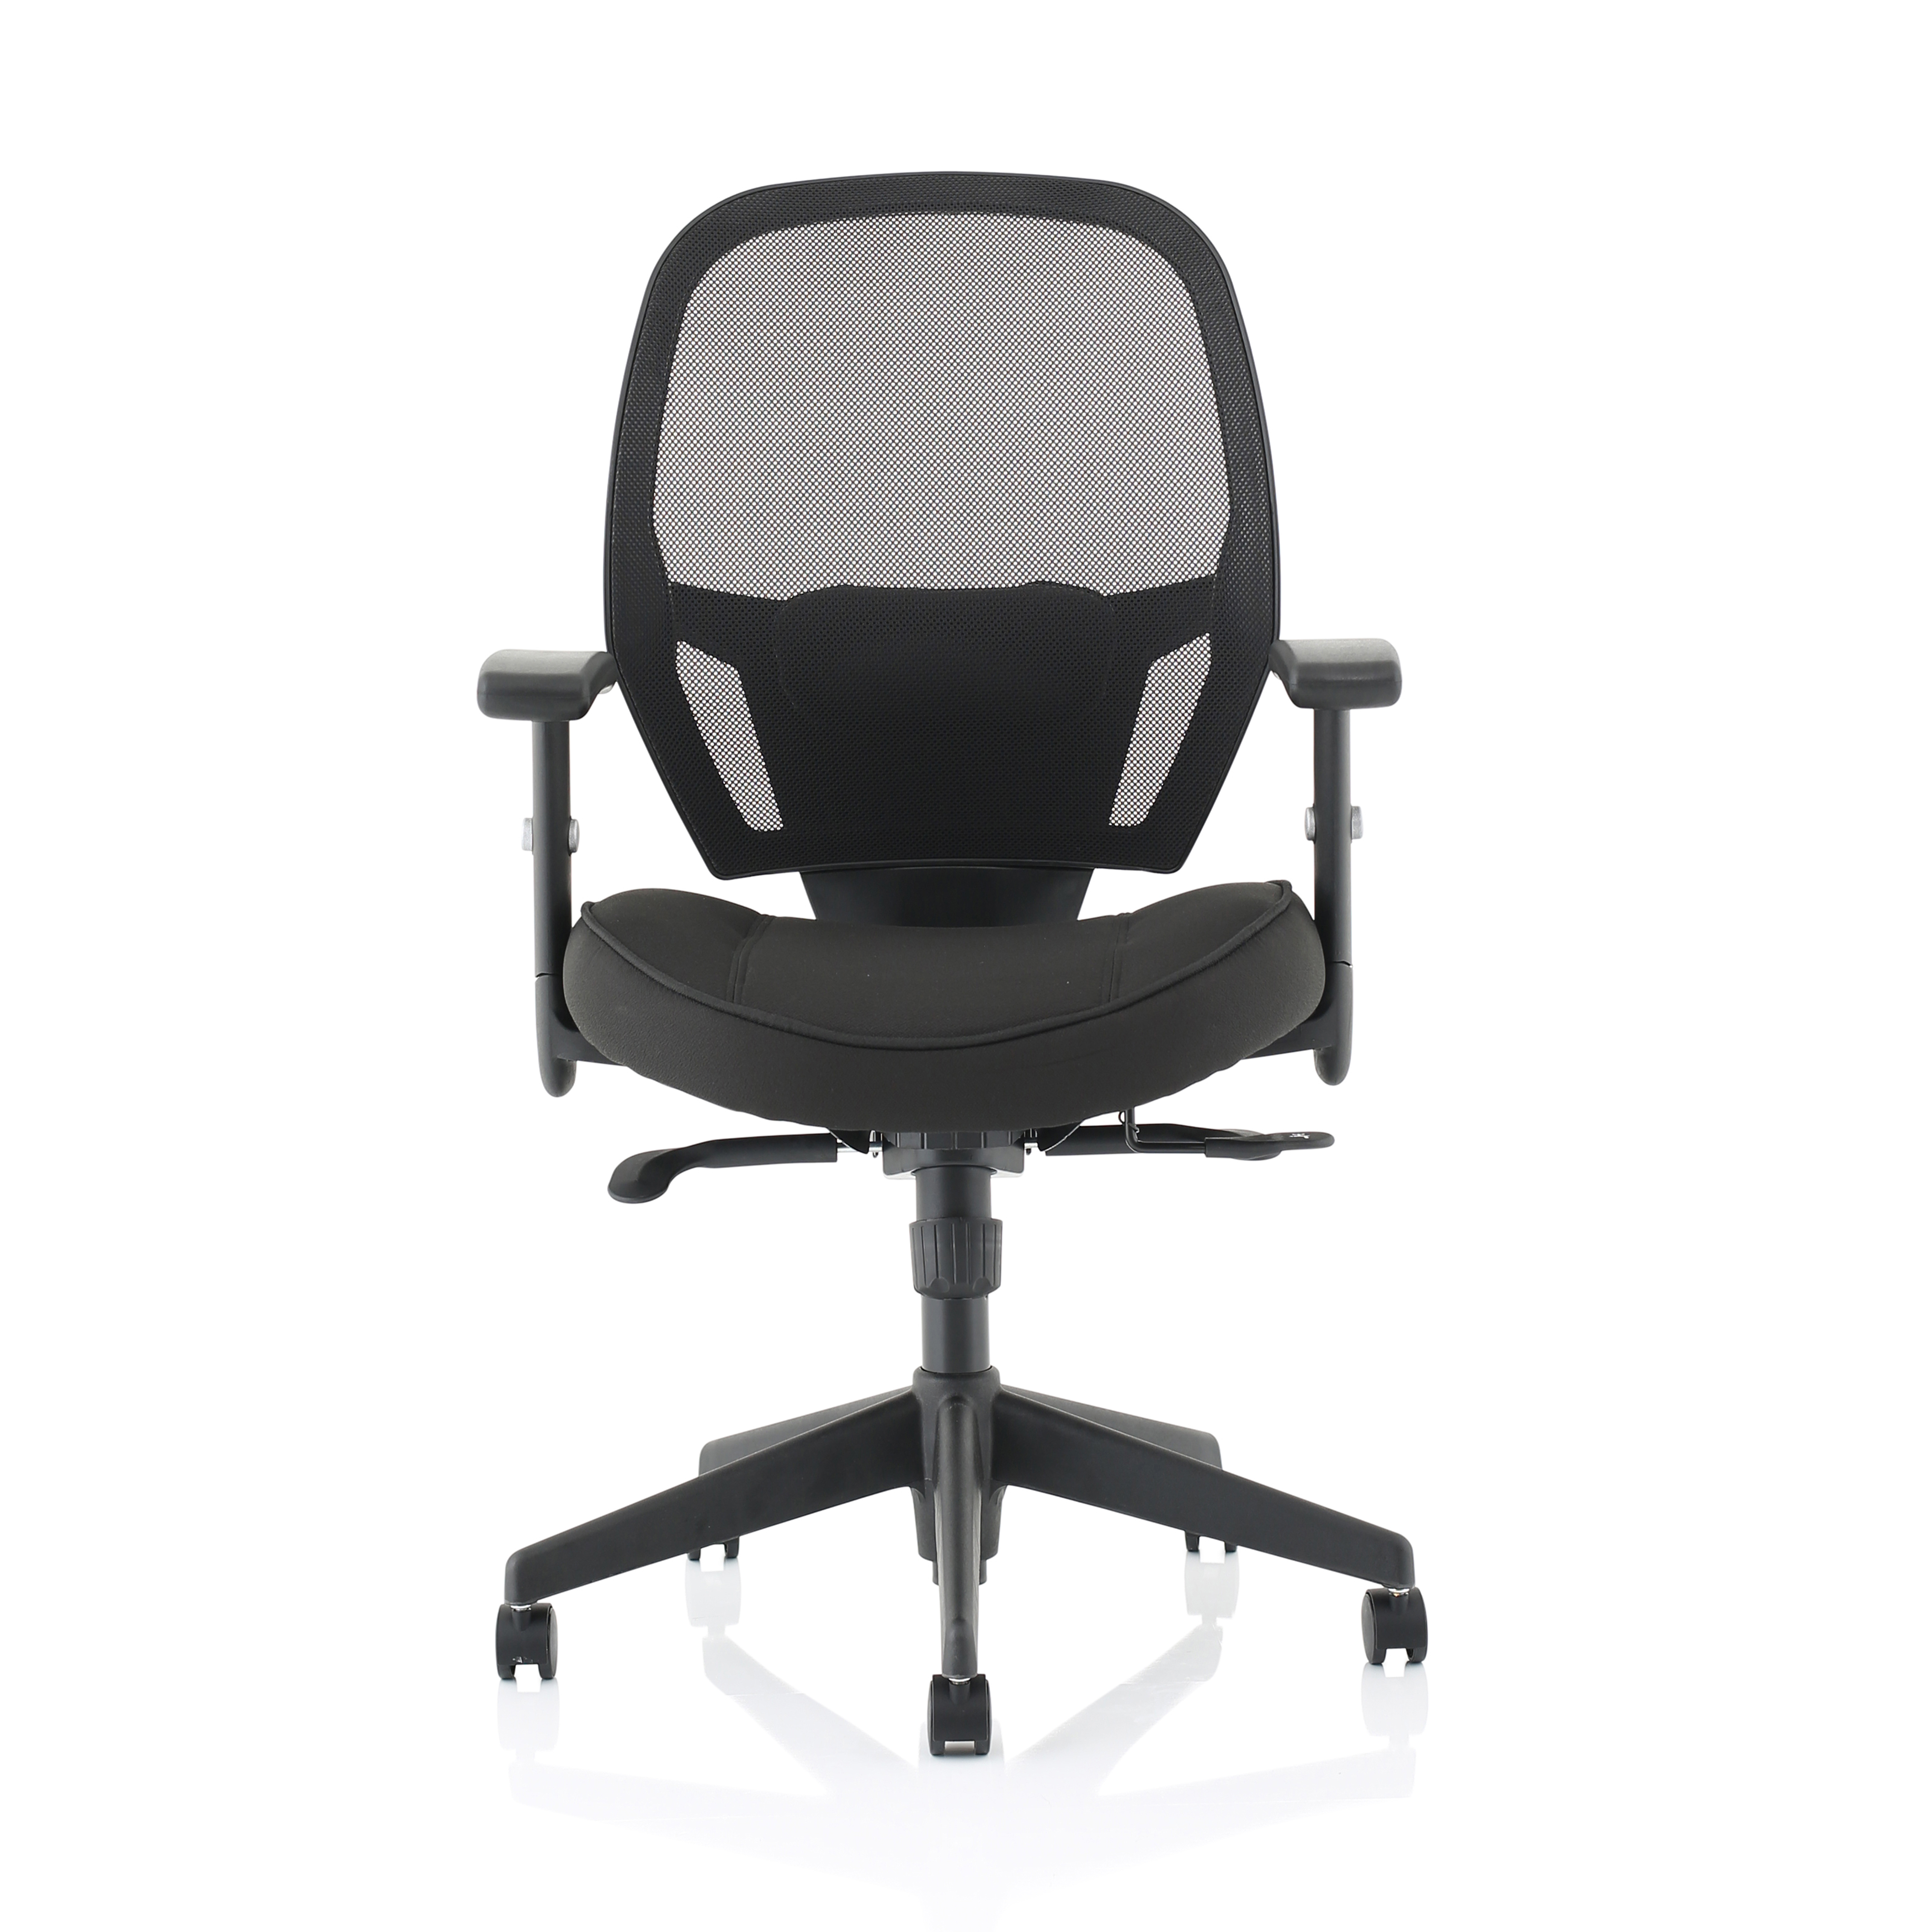 Trexus+Amaze+Synchronous+Mesh+Chair+Black+520x520x470-600mm+Ref+11186-02Black